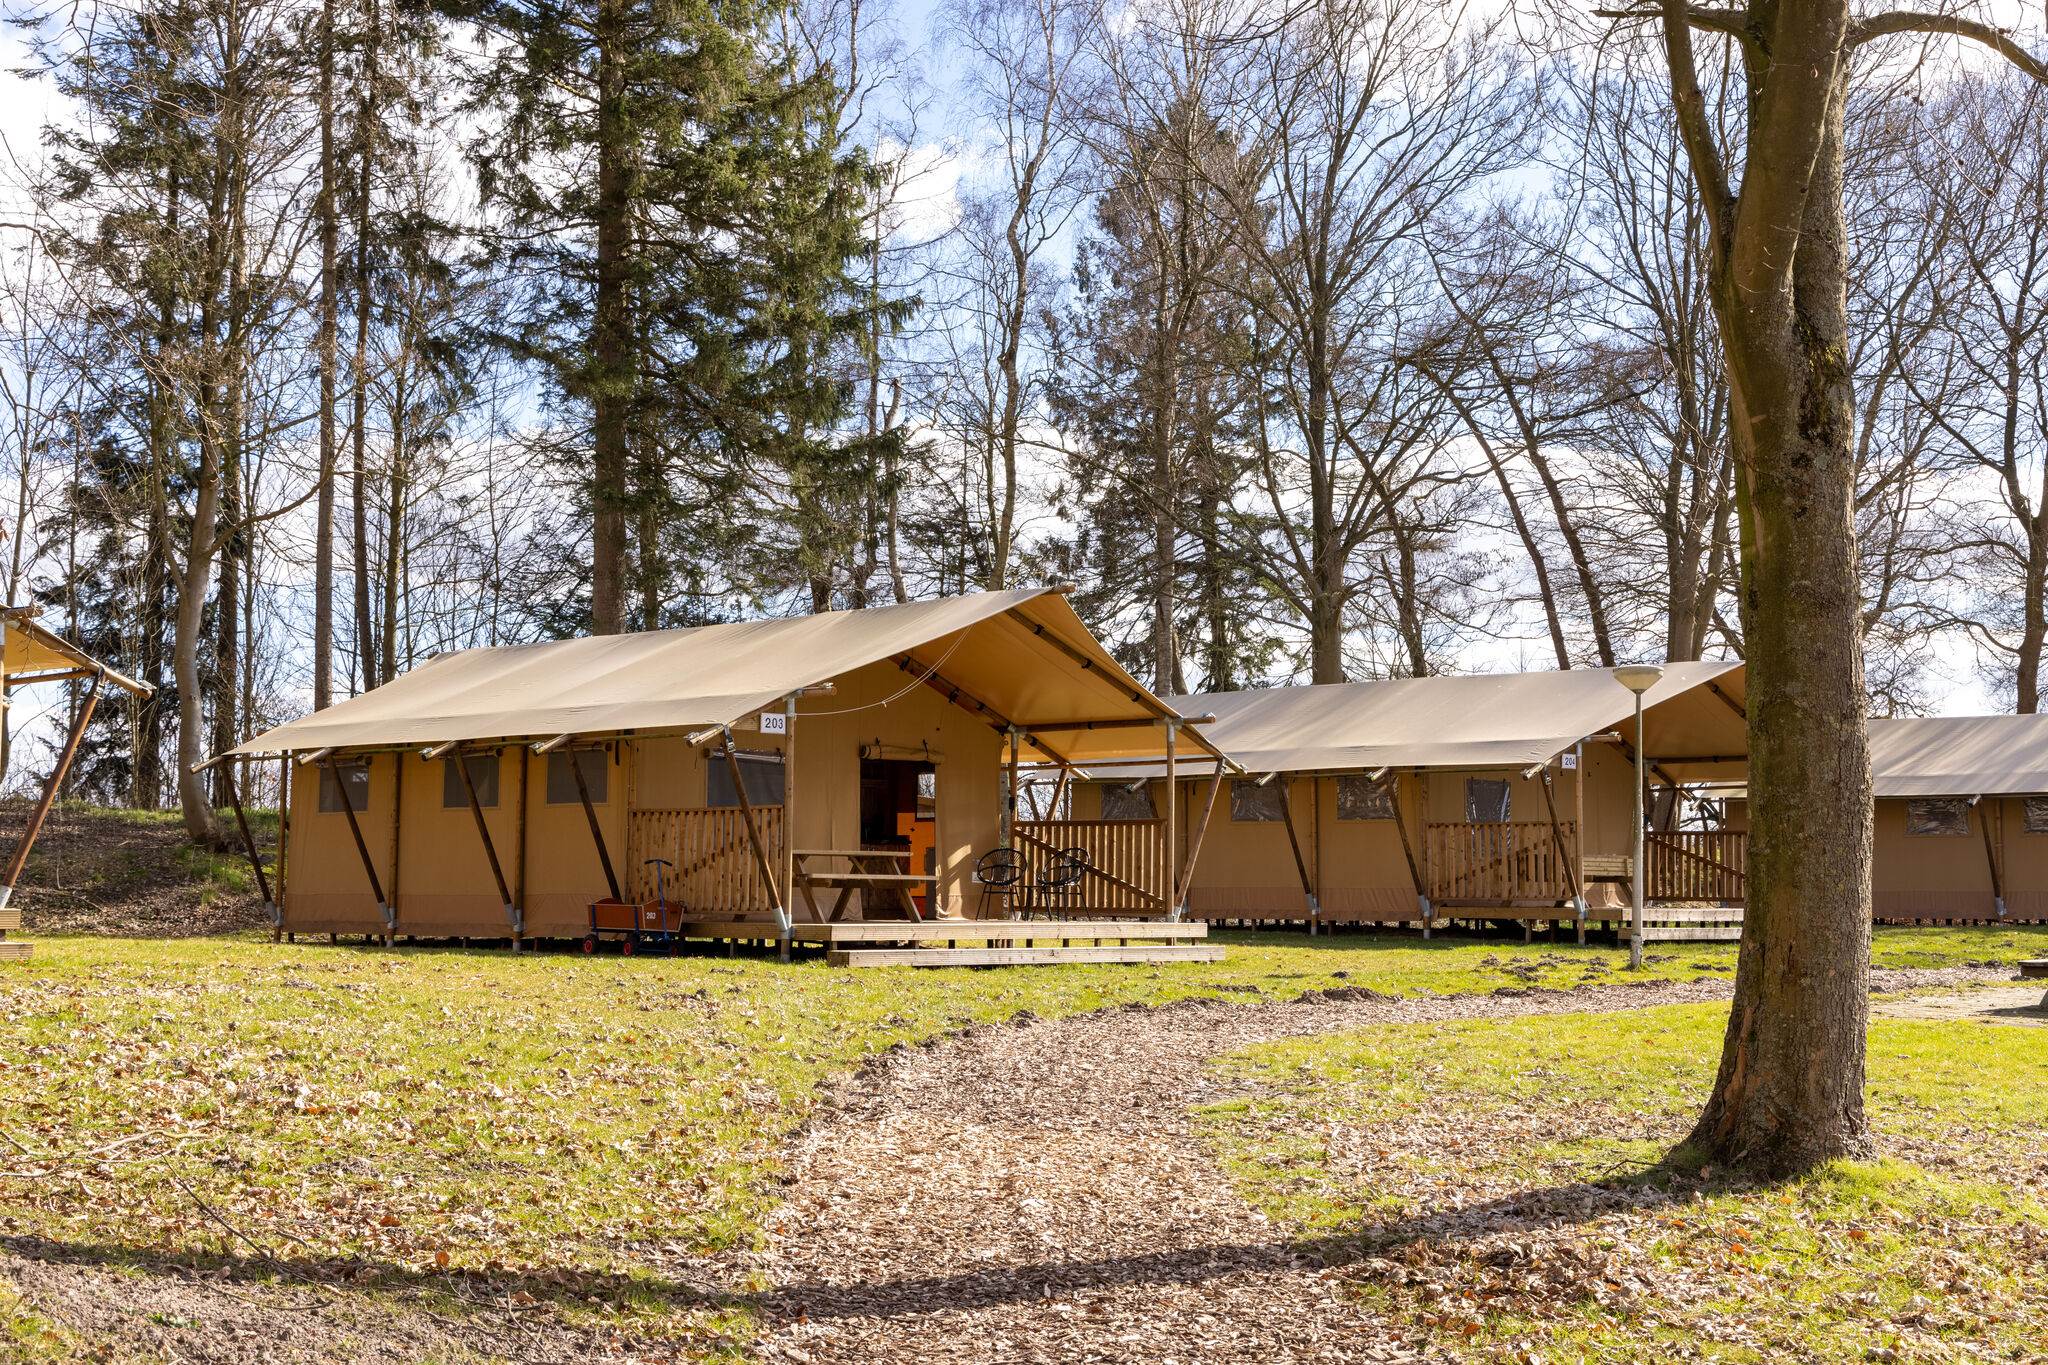 Nice safari tent with kitchen, at a recreational lake